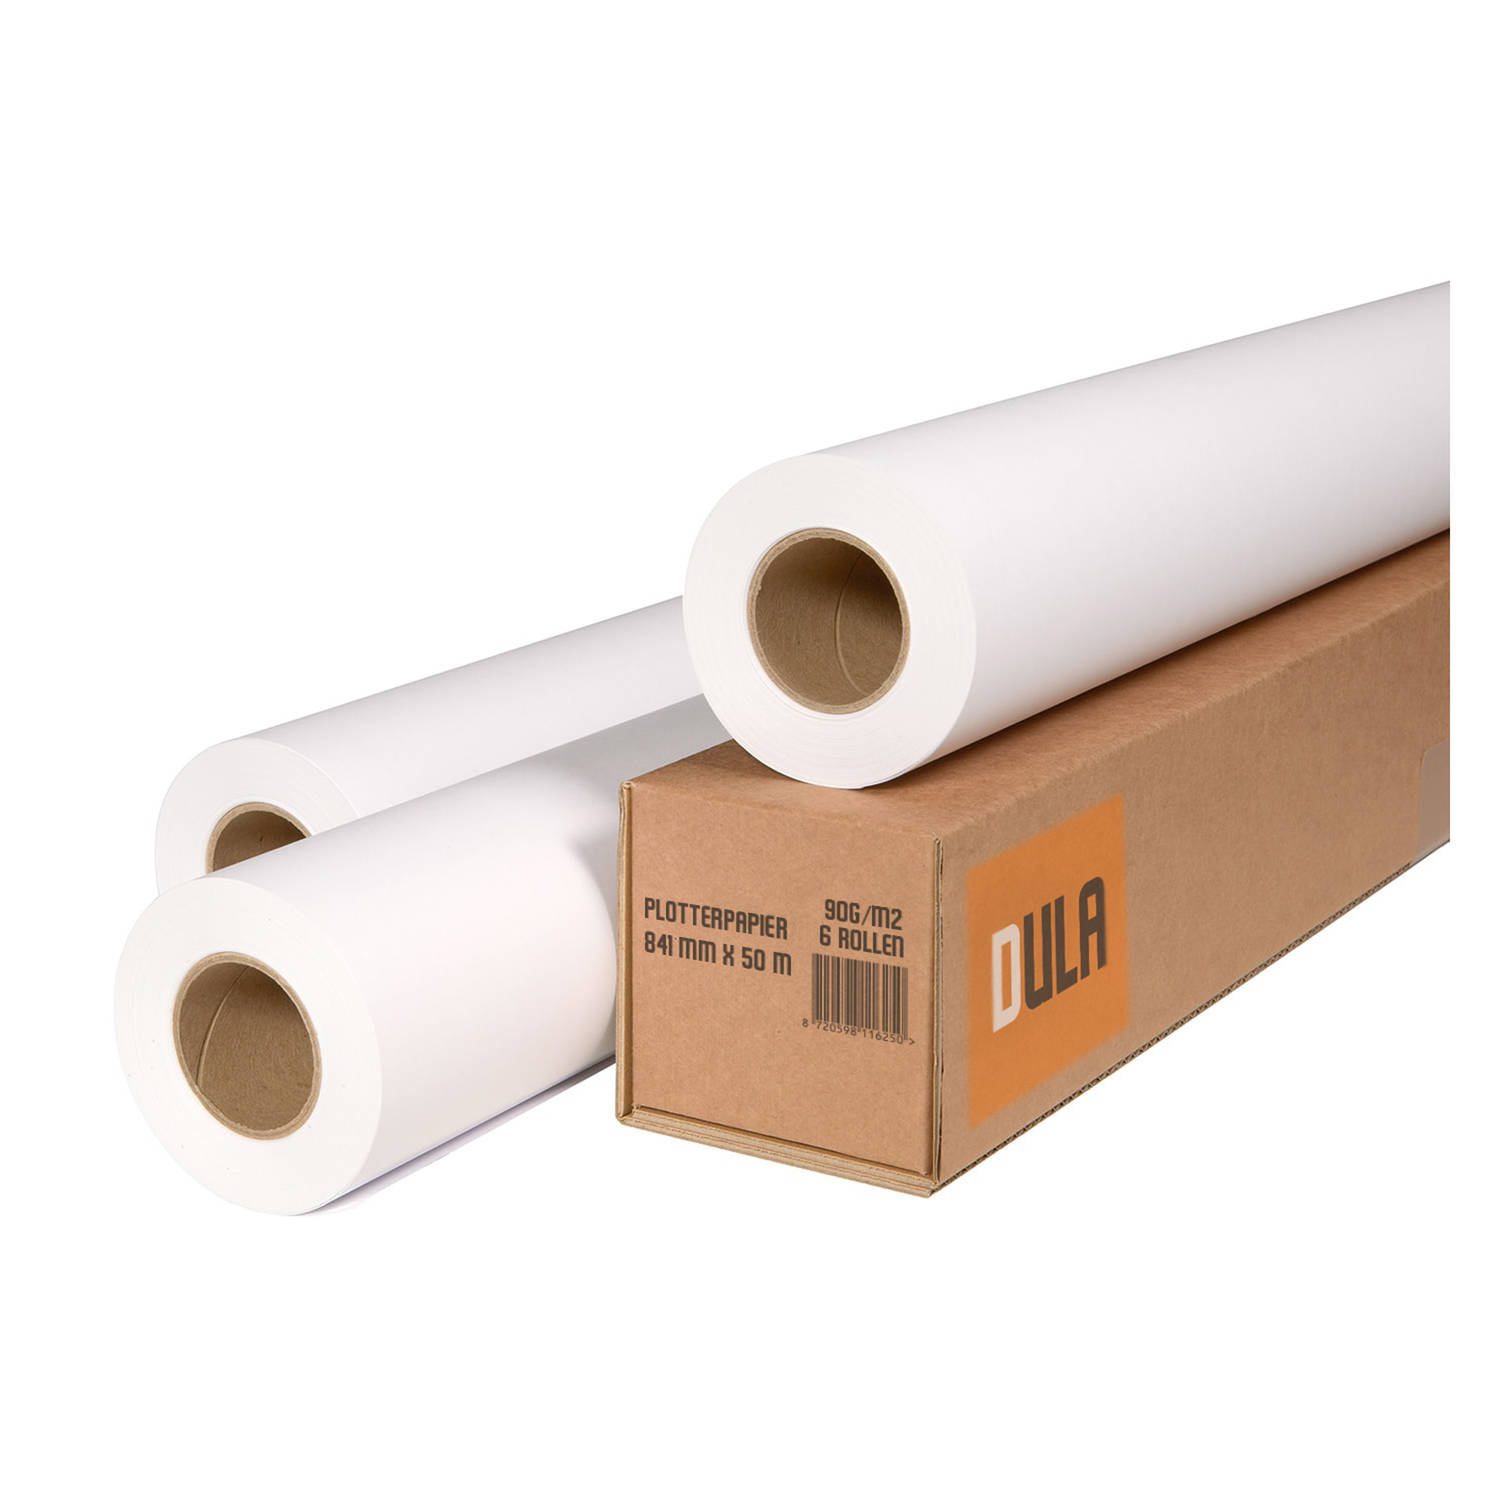 DULA Plotterpapier inkjetpapier 841mm x 50m 90 gram 6 rollen A0 papier 33,1 inch